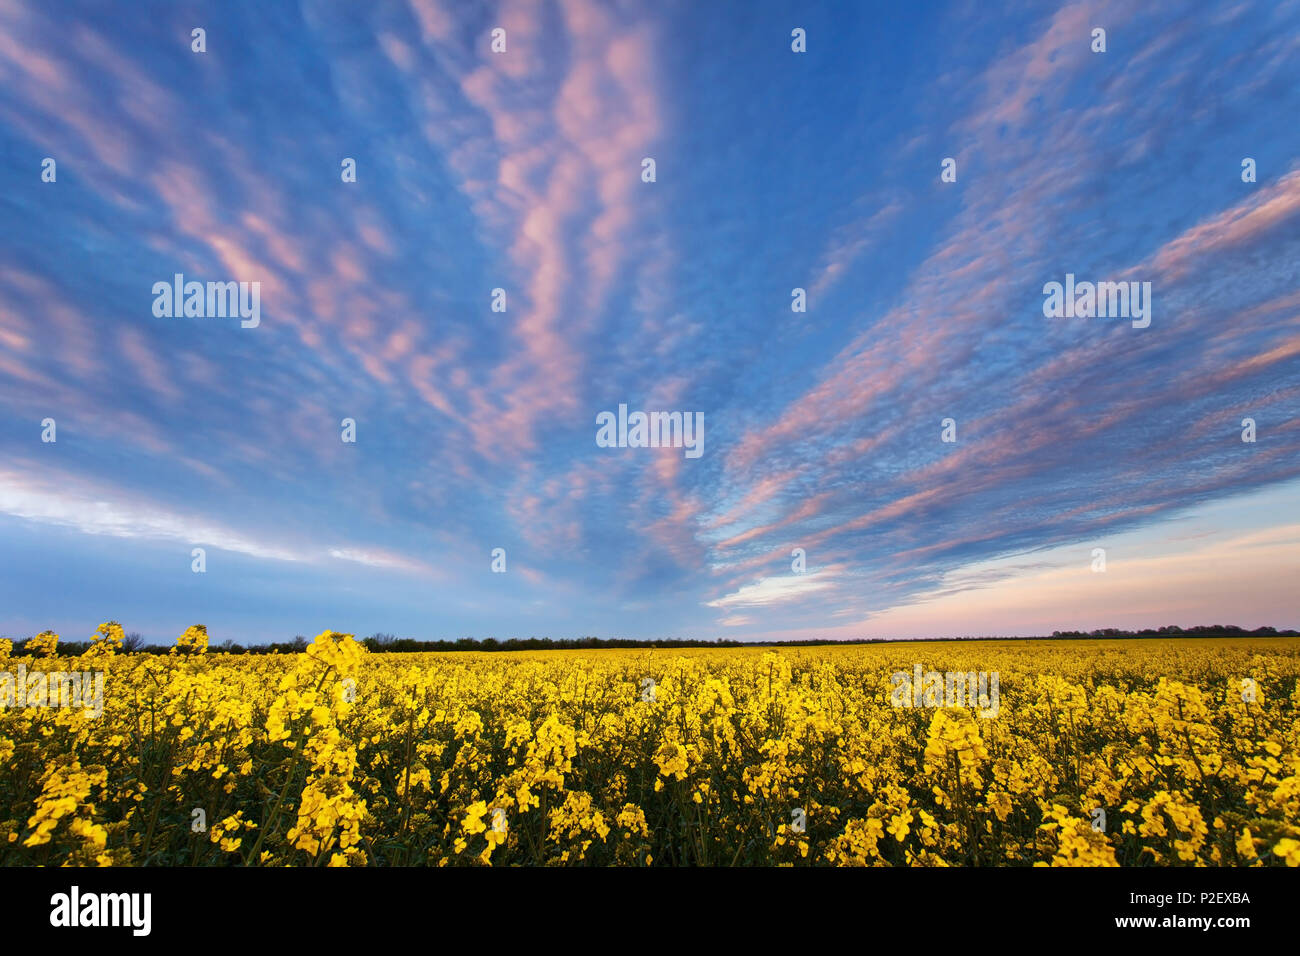 Sonnenuntergang, Coleseed, Feld, Sommer, Sachsen - Anhalt, Deutschland, Europa Stockfoto